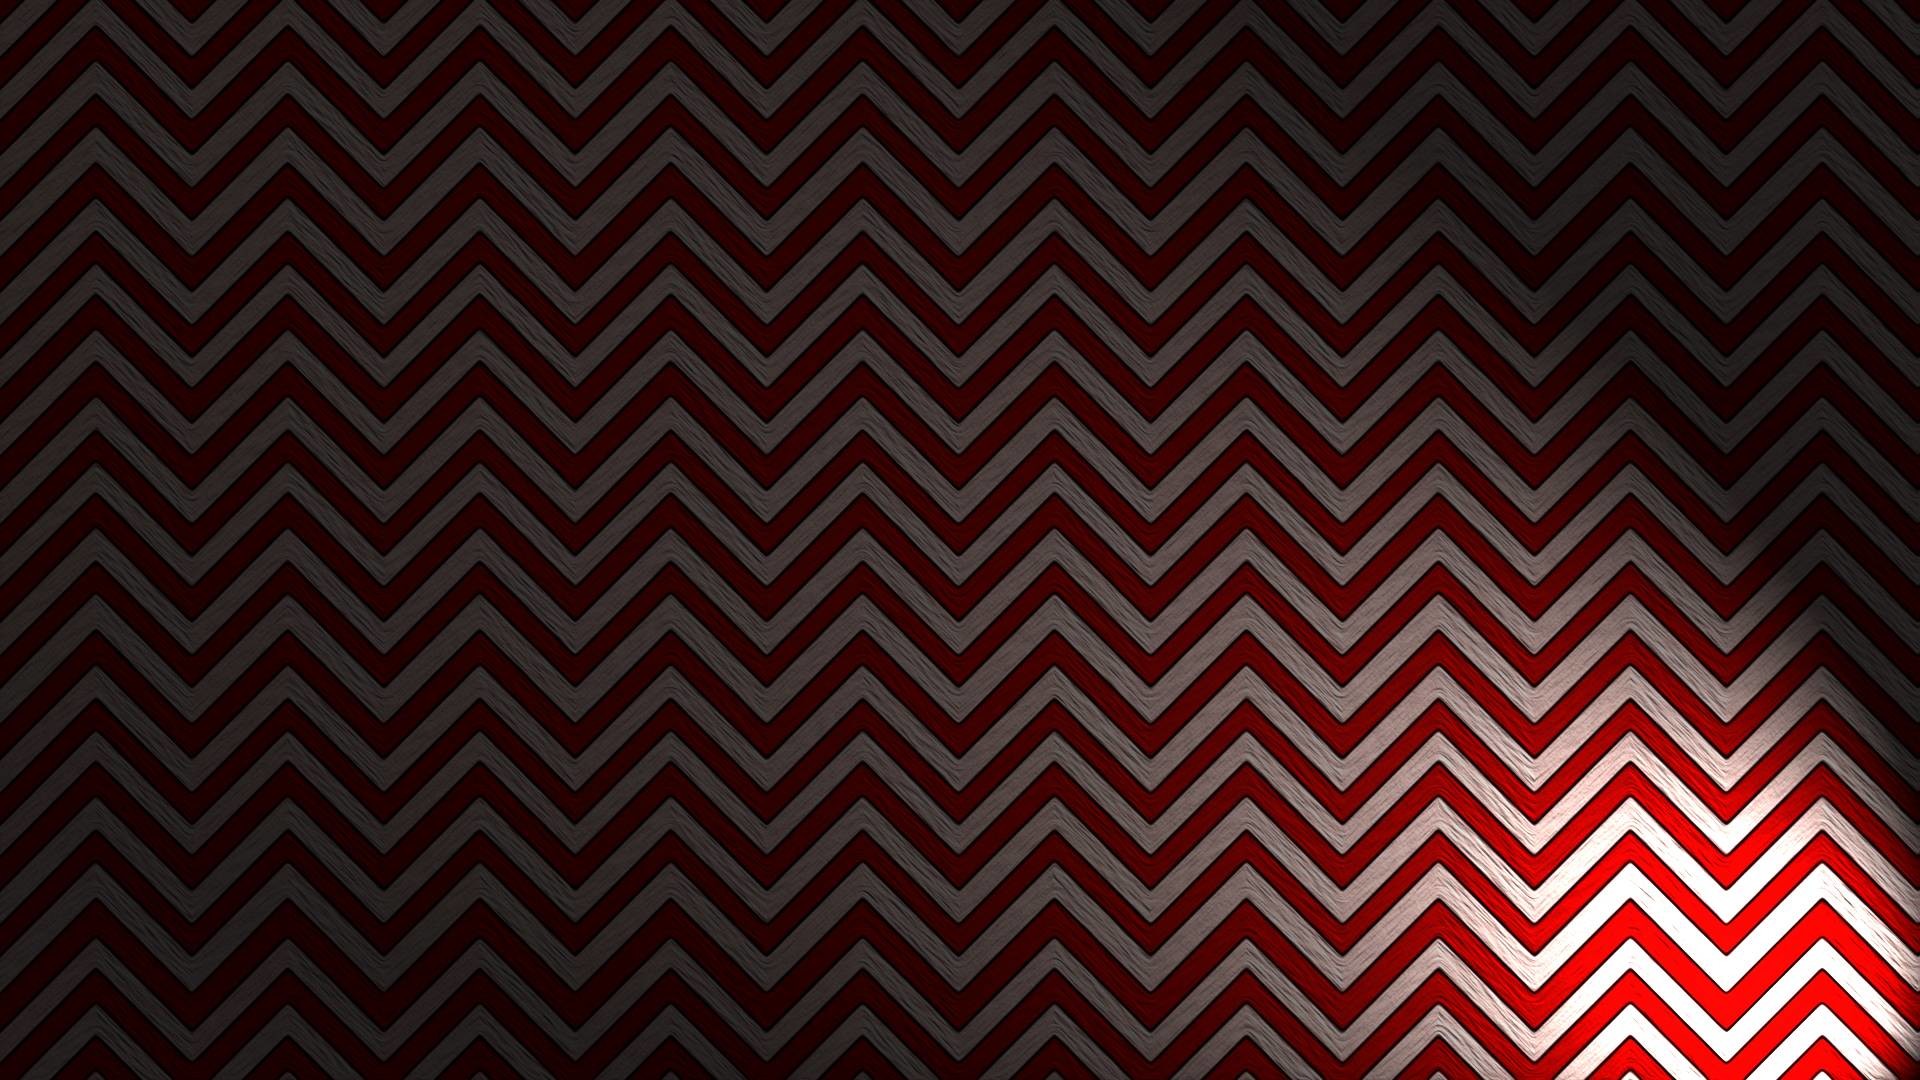 twin peaks wallpaper,pattern,red,orange,brown,design